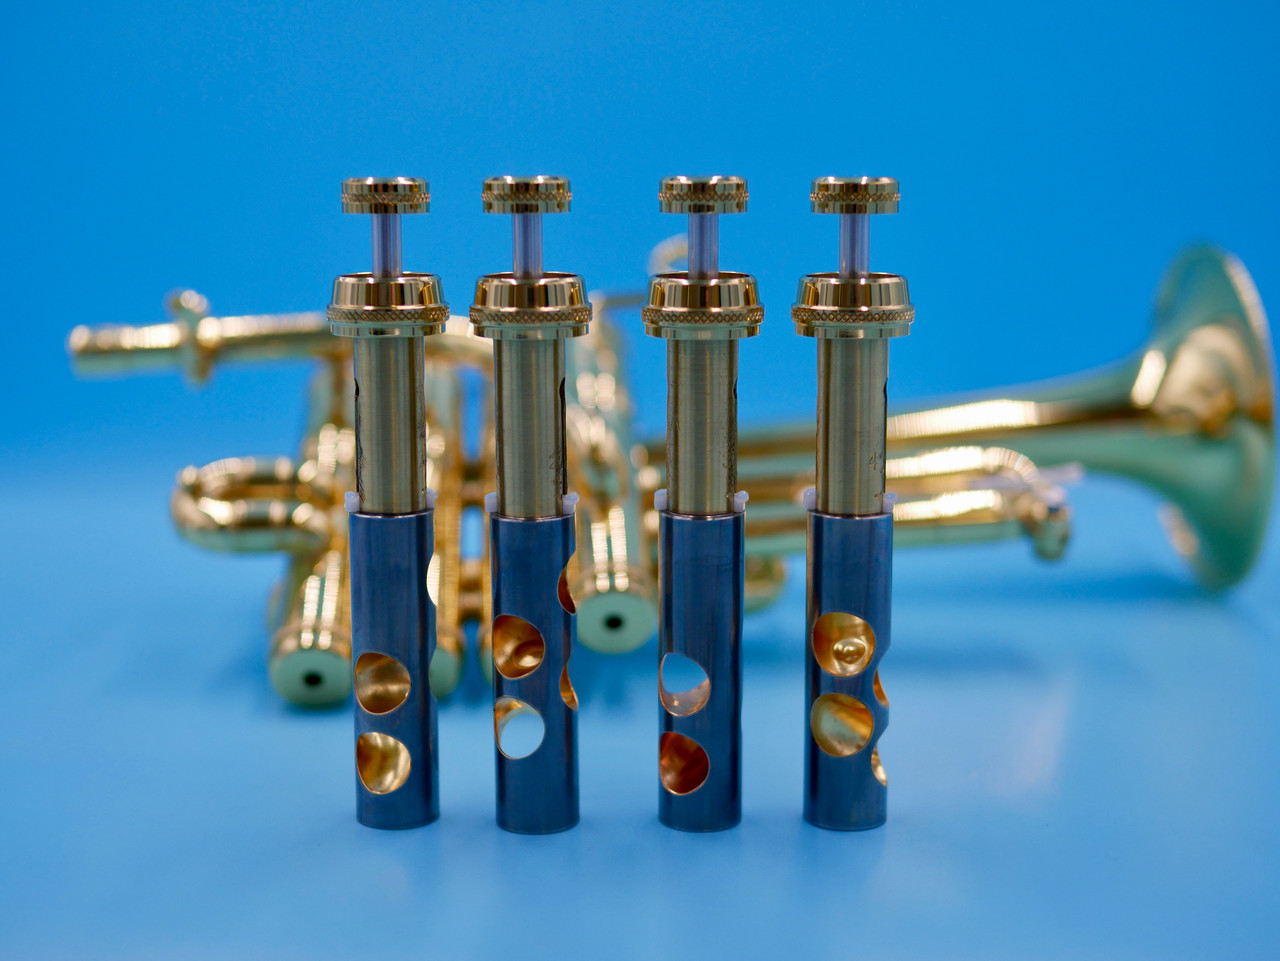 The wonderful CarolBrass 7775 Bb/A Piccolo Trumpet in lacquer - Austin  Custom Brass Web Store